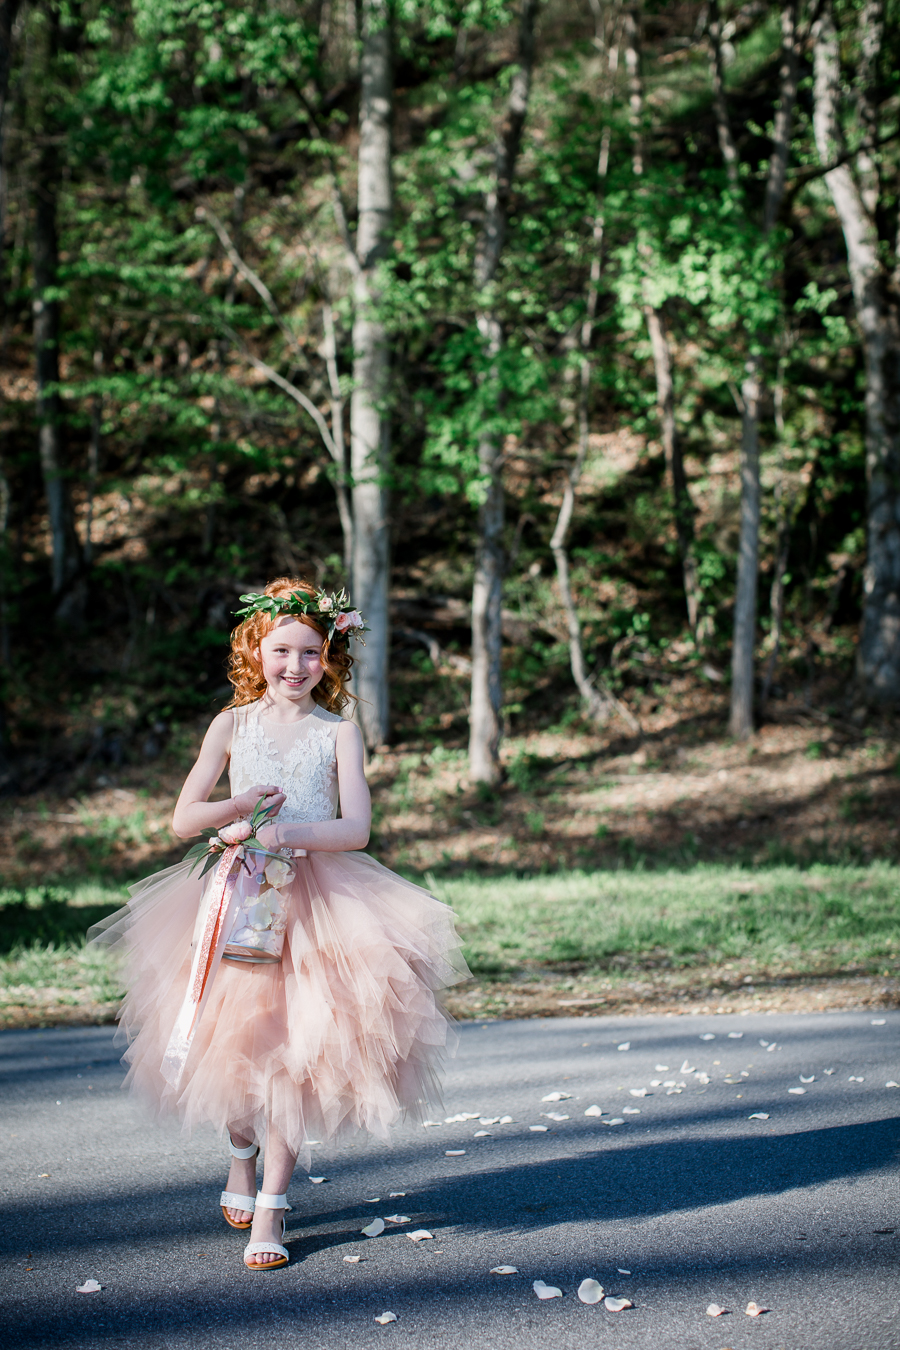 Flower Girl walking at this North Carolina Elopement by Knoxville Wedding Photographer, Amanda May Photos.